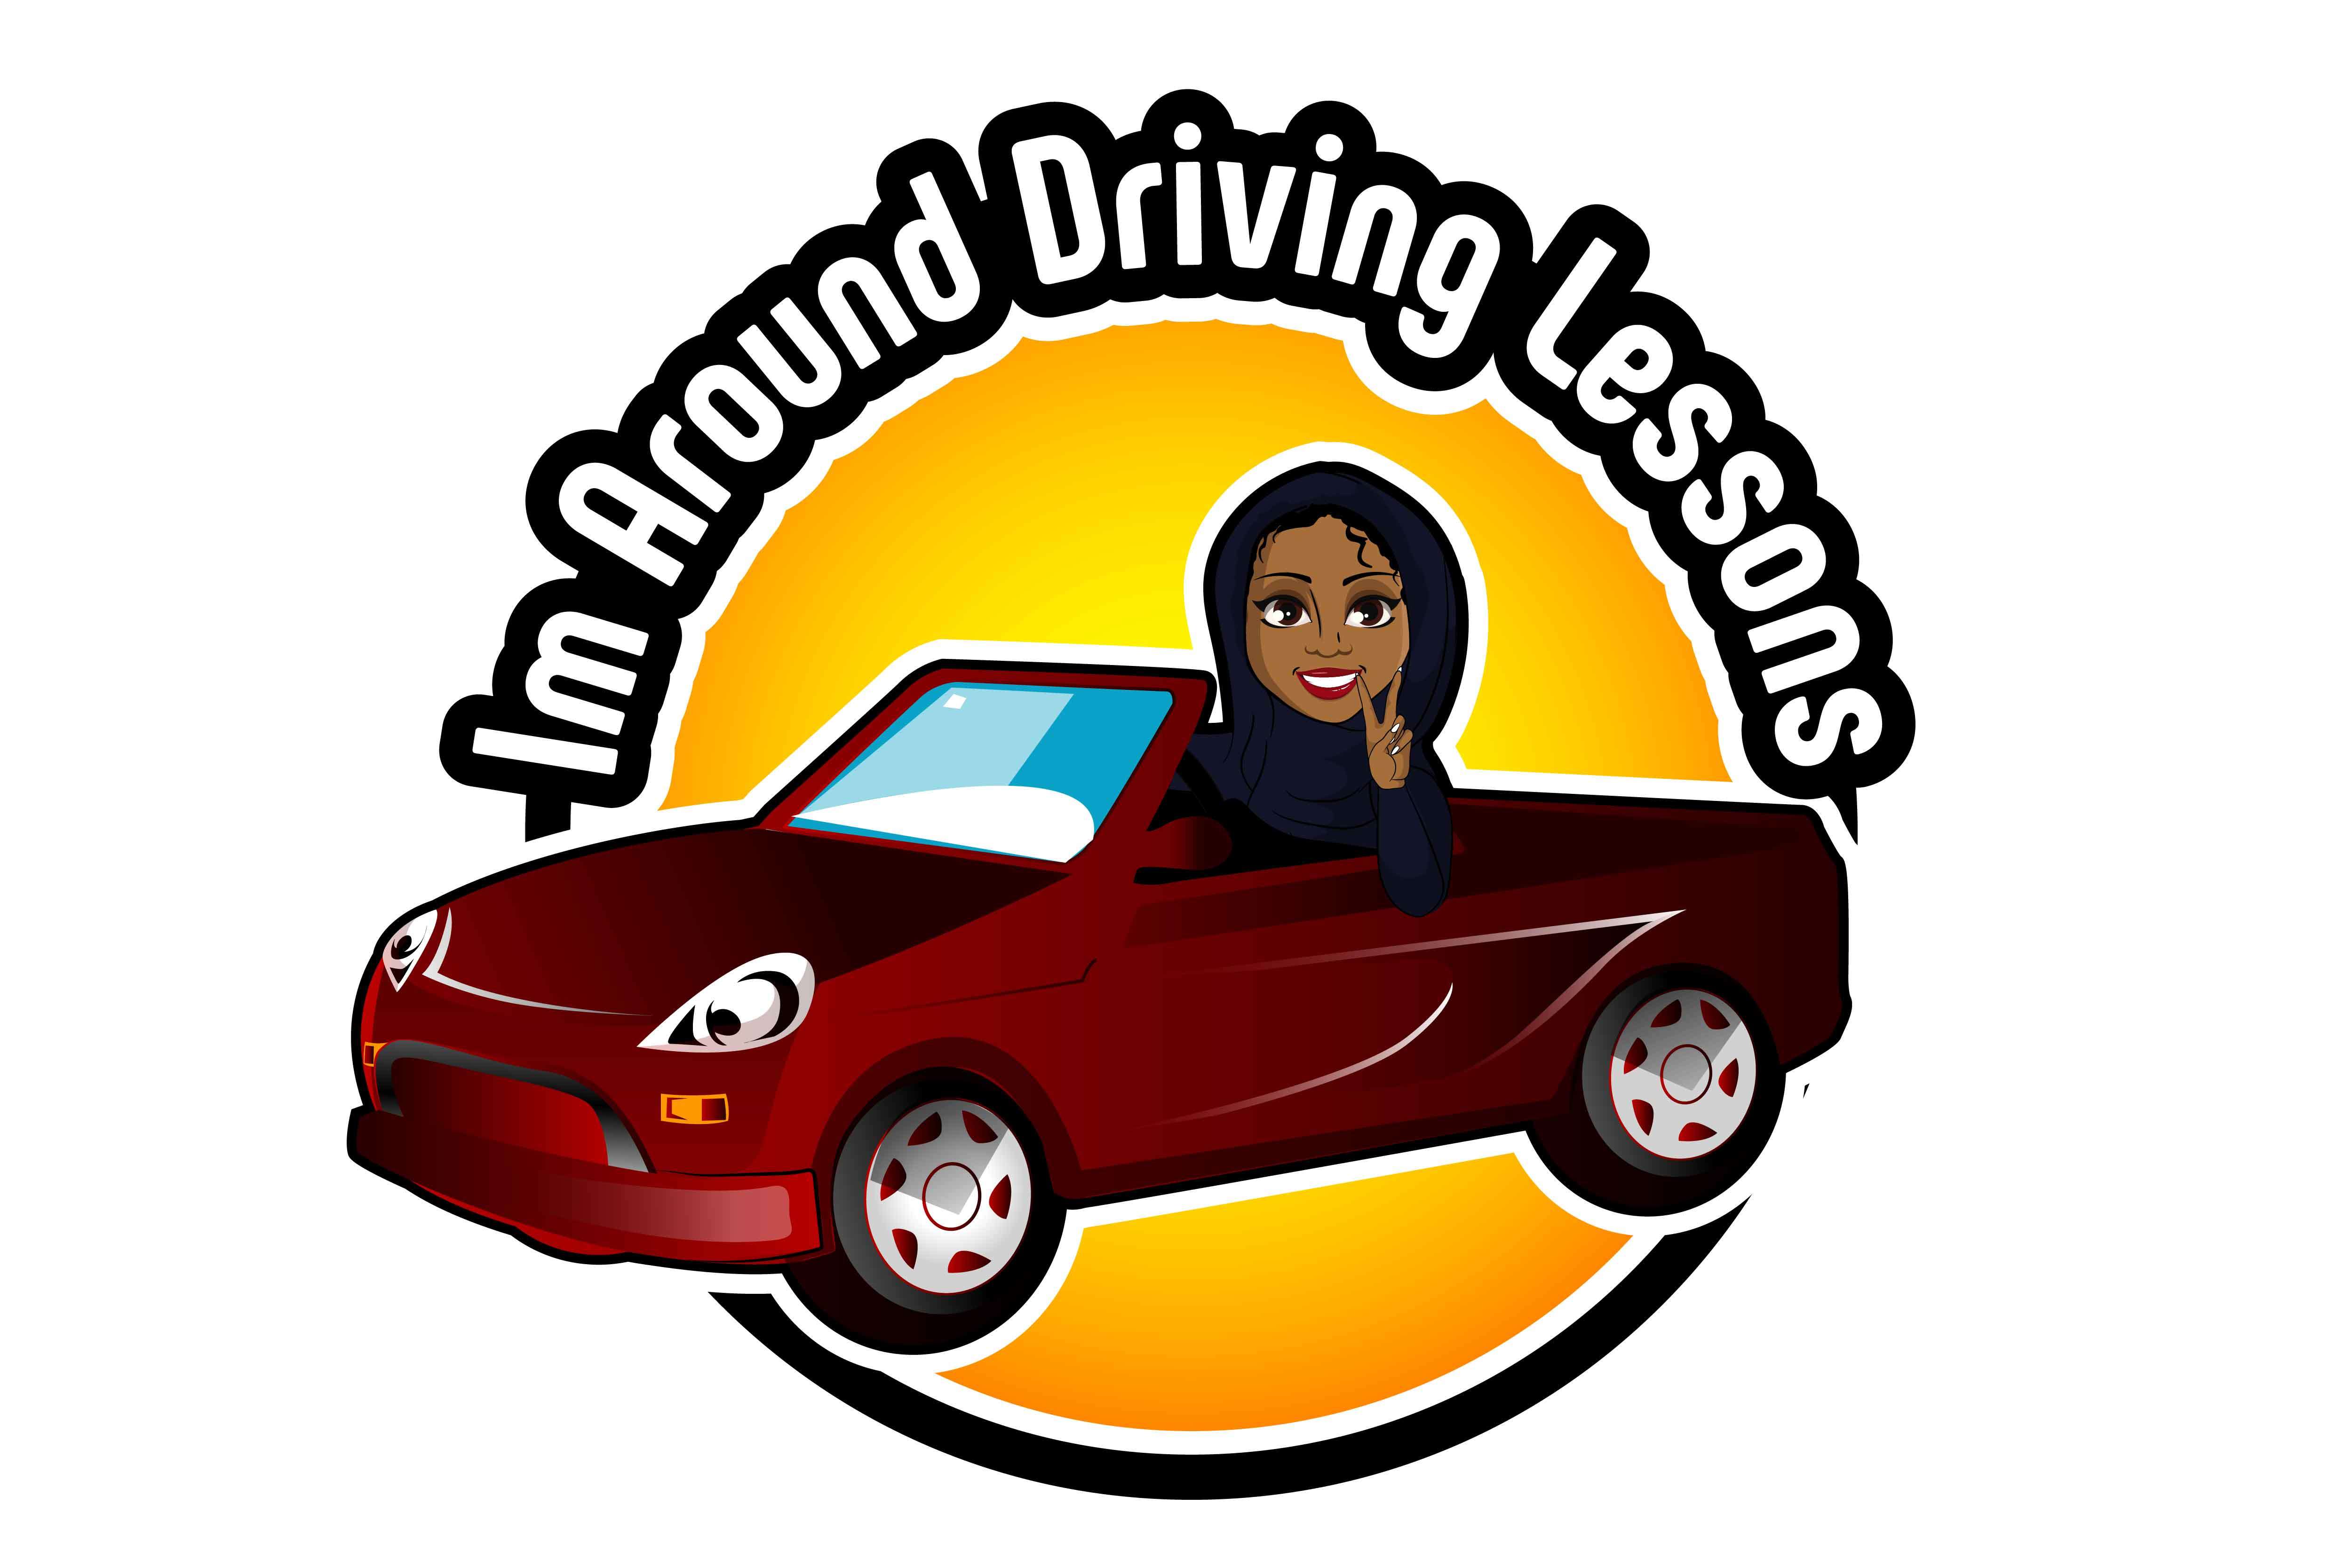 Driving School Instagram. Driving School banner mocup. 10. Brooklyn Driving School Inc. Drive around